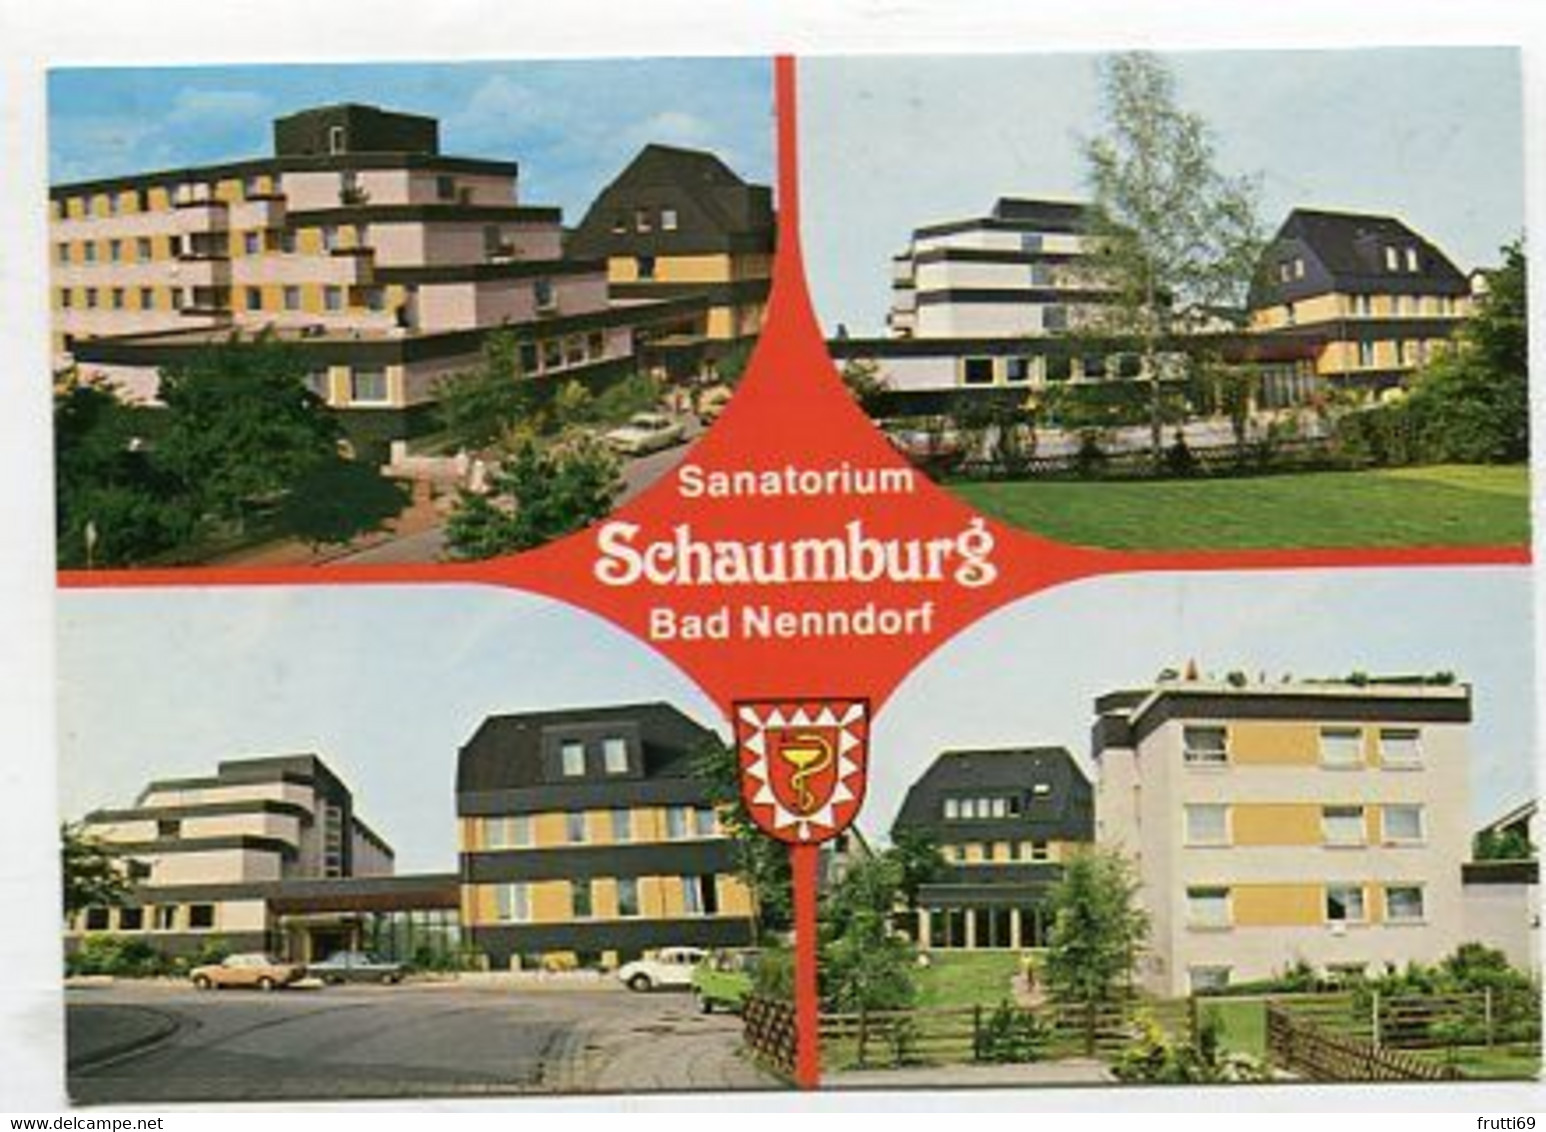 AK 017714 GERMANY - Bad Nenndorf - Sanatorium Schaumburg - Bad Nenndorf